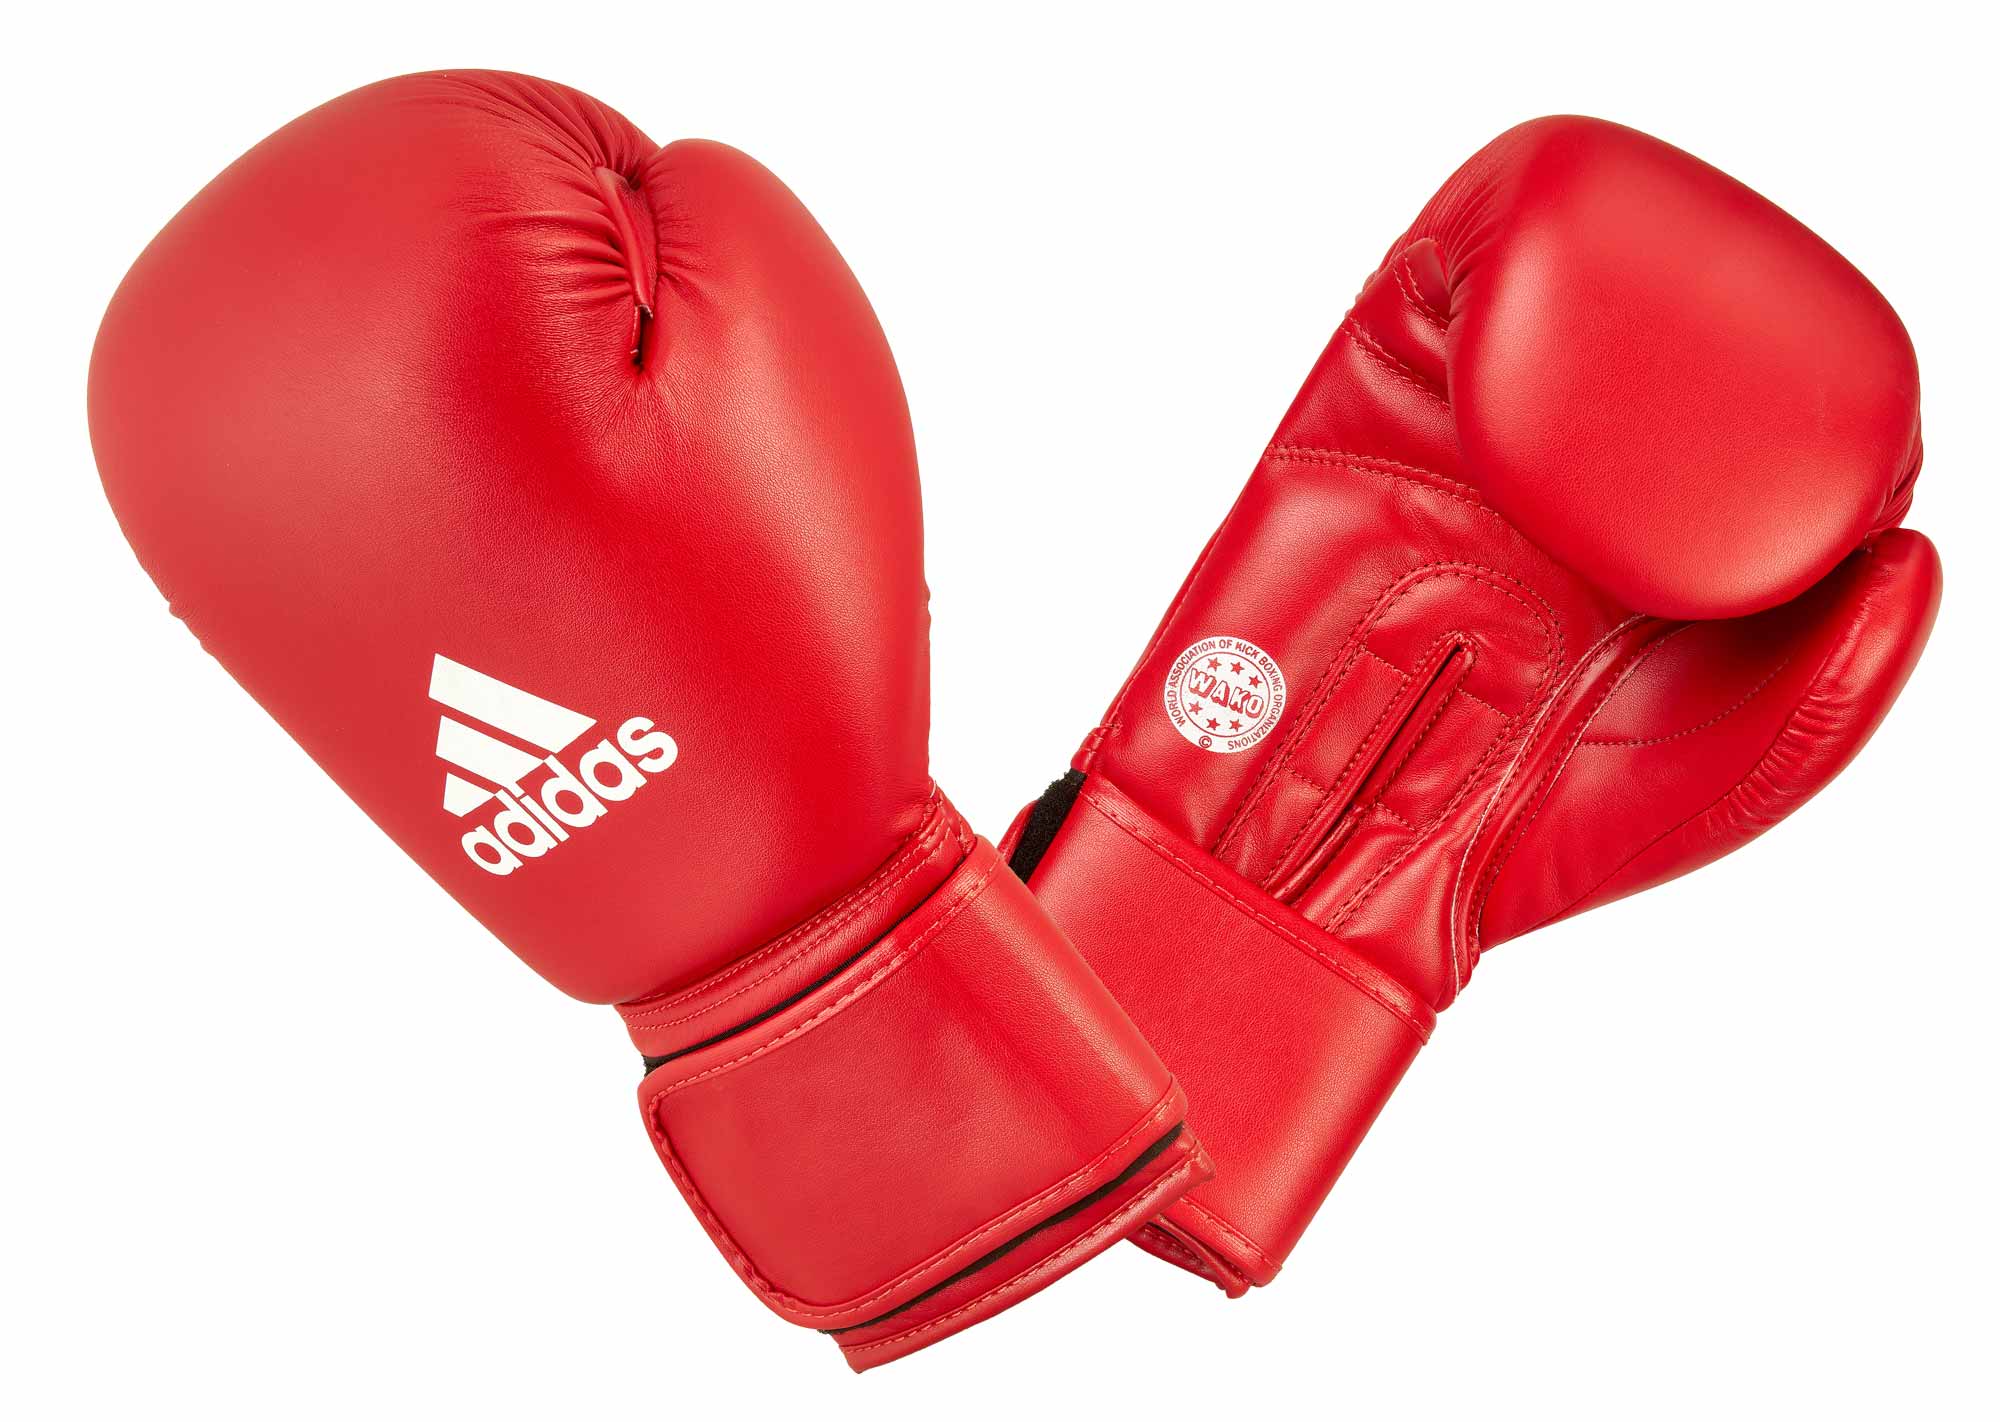 adidas WAKO Kickboxing Training Glove 10 oz  ADIWAKOG2 red